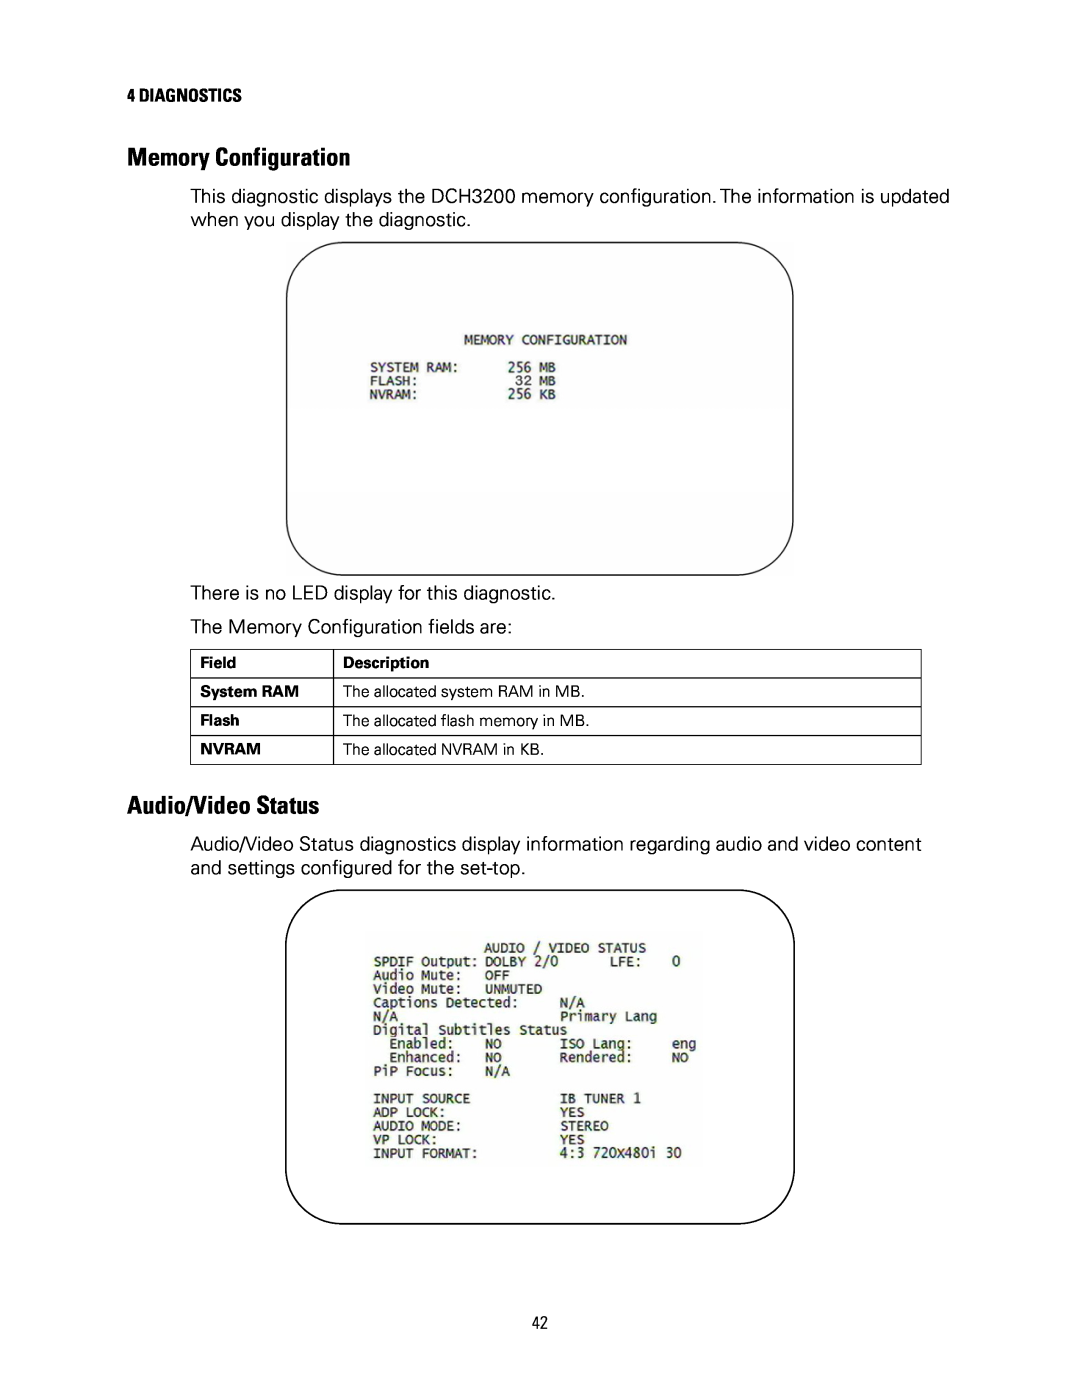 Motorola DCH3200 installation manual Memory Configuration, Audio/Video Status 